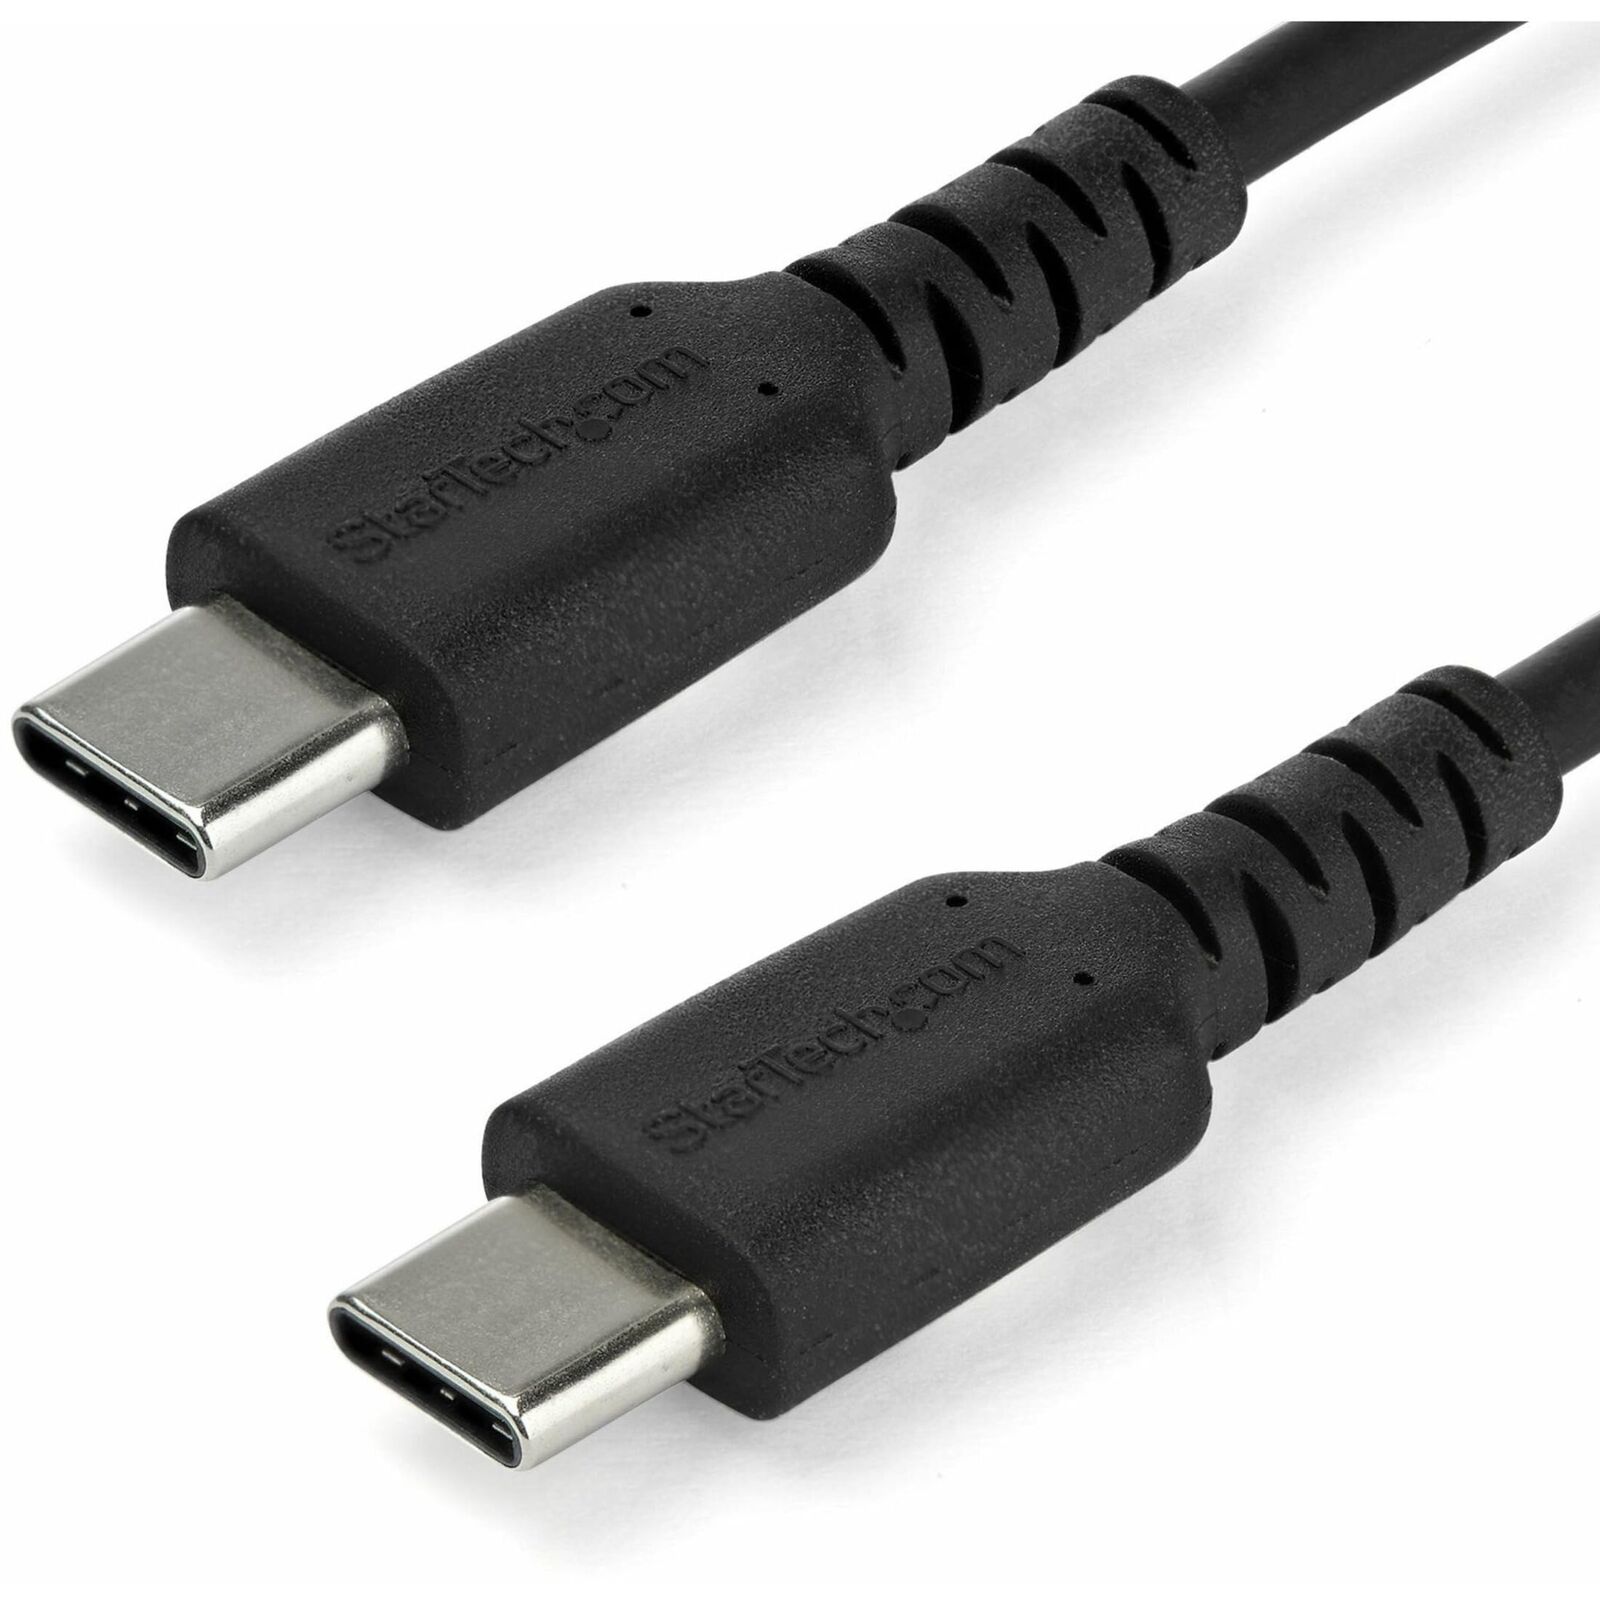 StarTech.com RUSB2CC1MB 1m (3.28 ft.) USB C Cable - Durable USB 2.0 Type C Cord